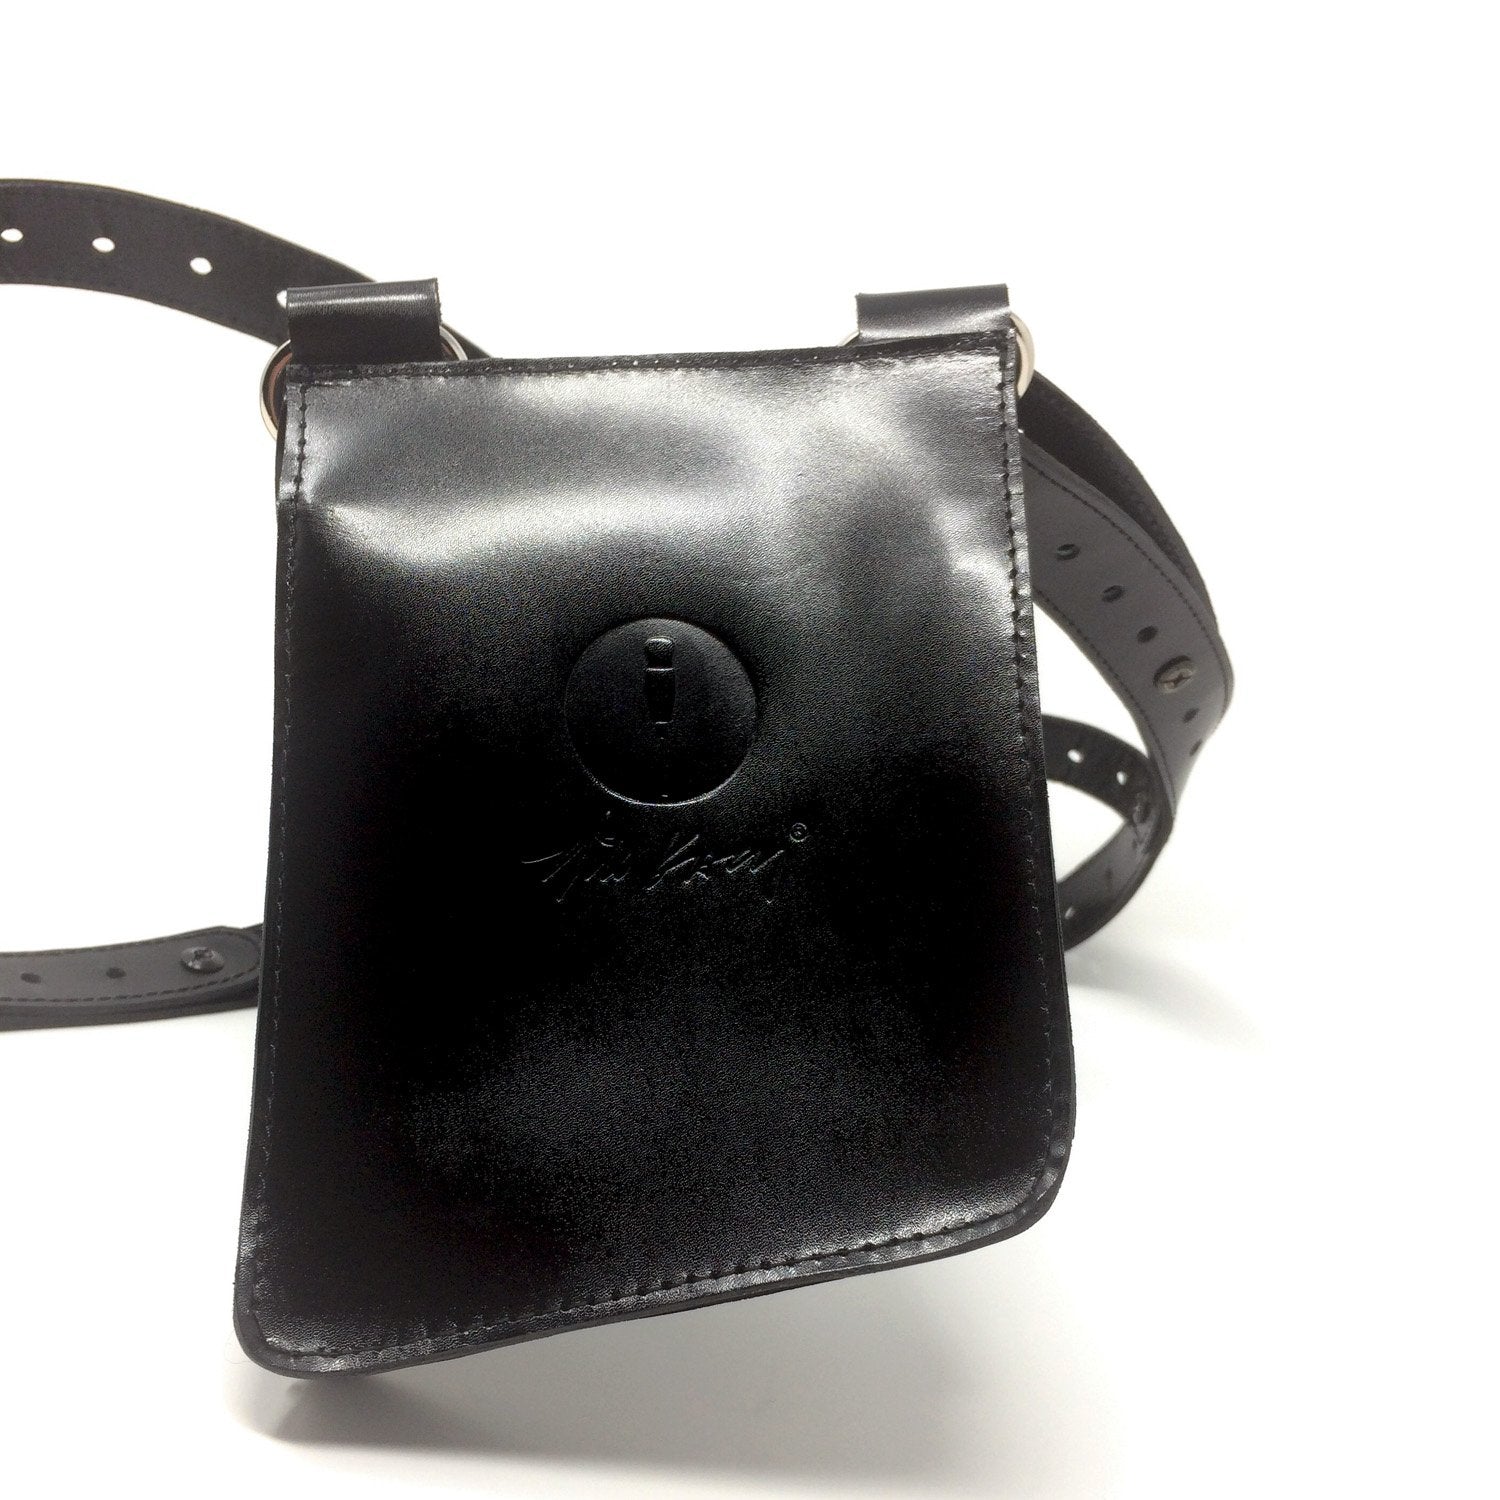 Dual) (Single Kacy NEW) or Harness Bag | NiK Modular + Adjustable with v2 Genderfree Holster Utility